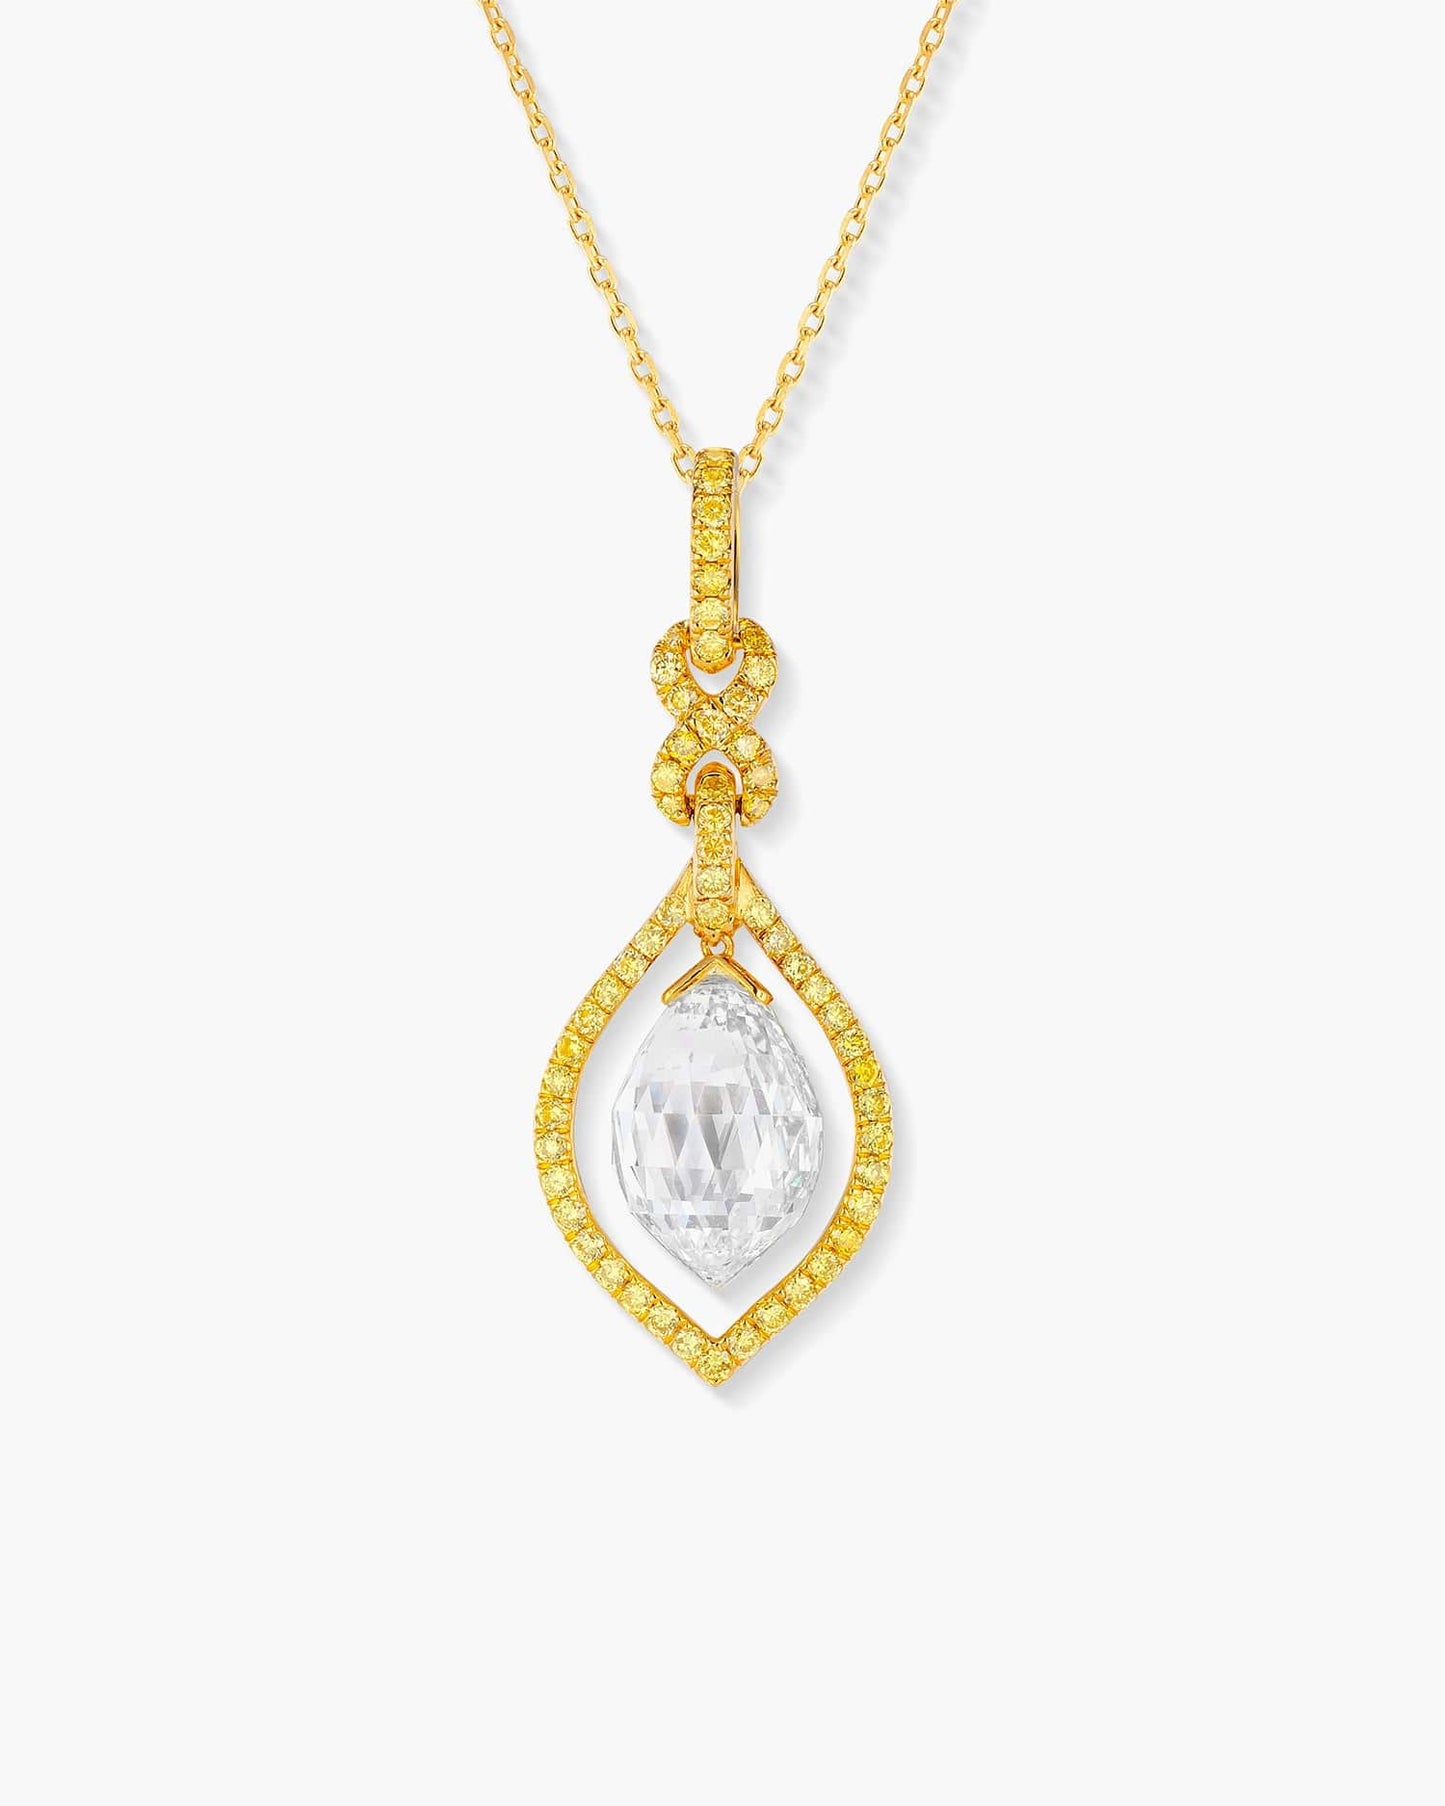 3.42 carat Briolette Cut White and Yellow Diamond Pendant Necklace